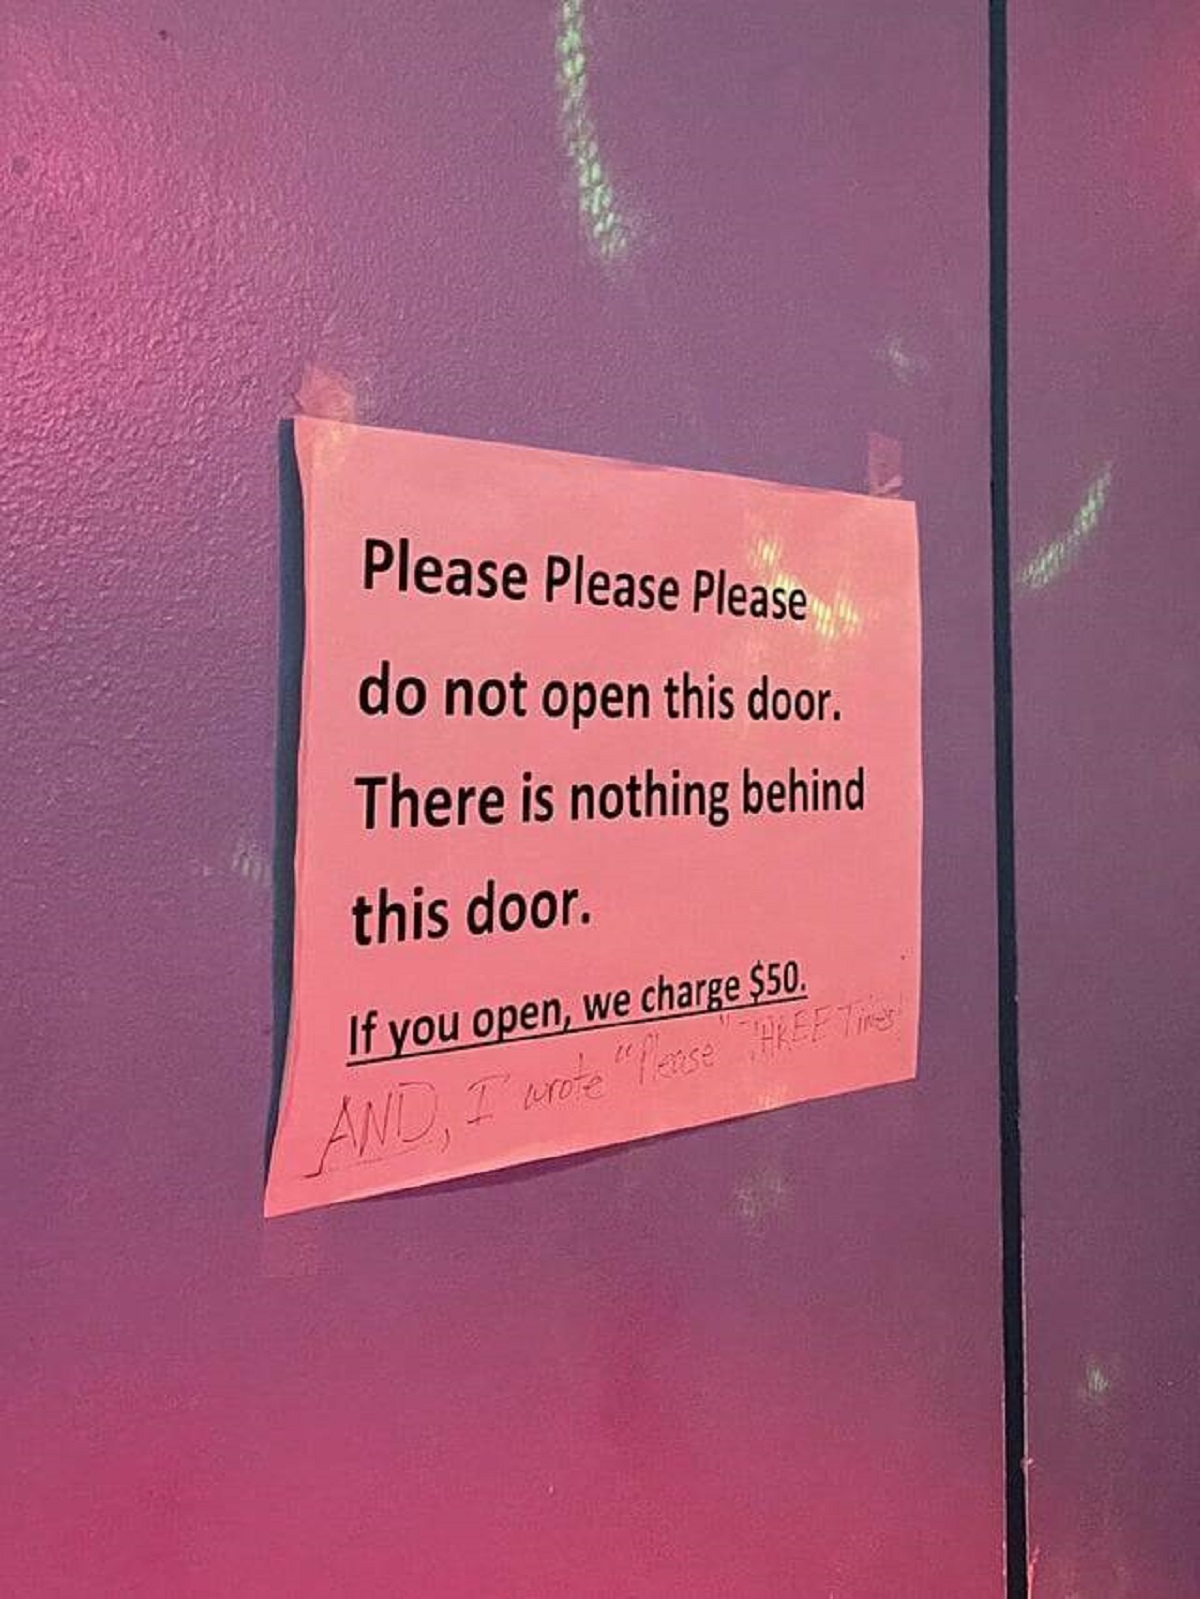 "This sign in a karaoke room imploring patrons not to open a door"